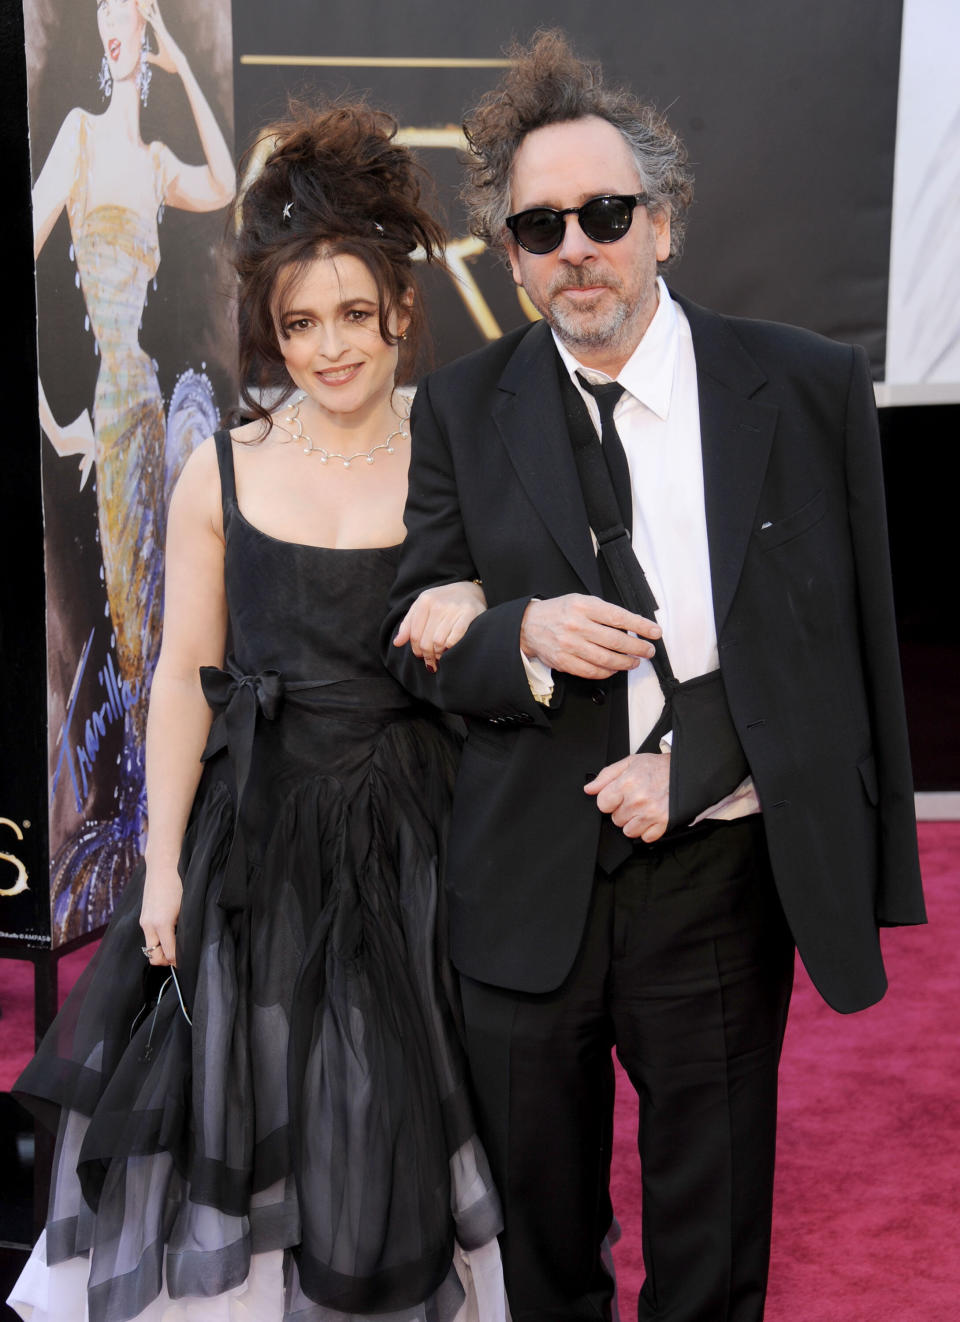 Helena Bonham Carter and director/husband Tim Burton arrive at the Oscars in 2013.&nbsp; (Photo: Gregg DeGuire via Getty Images)